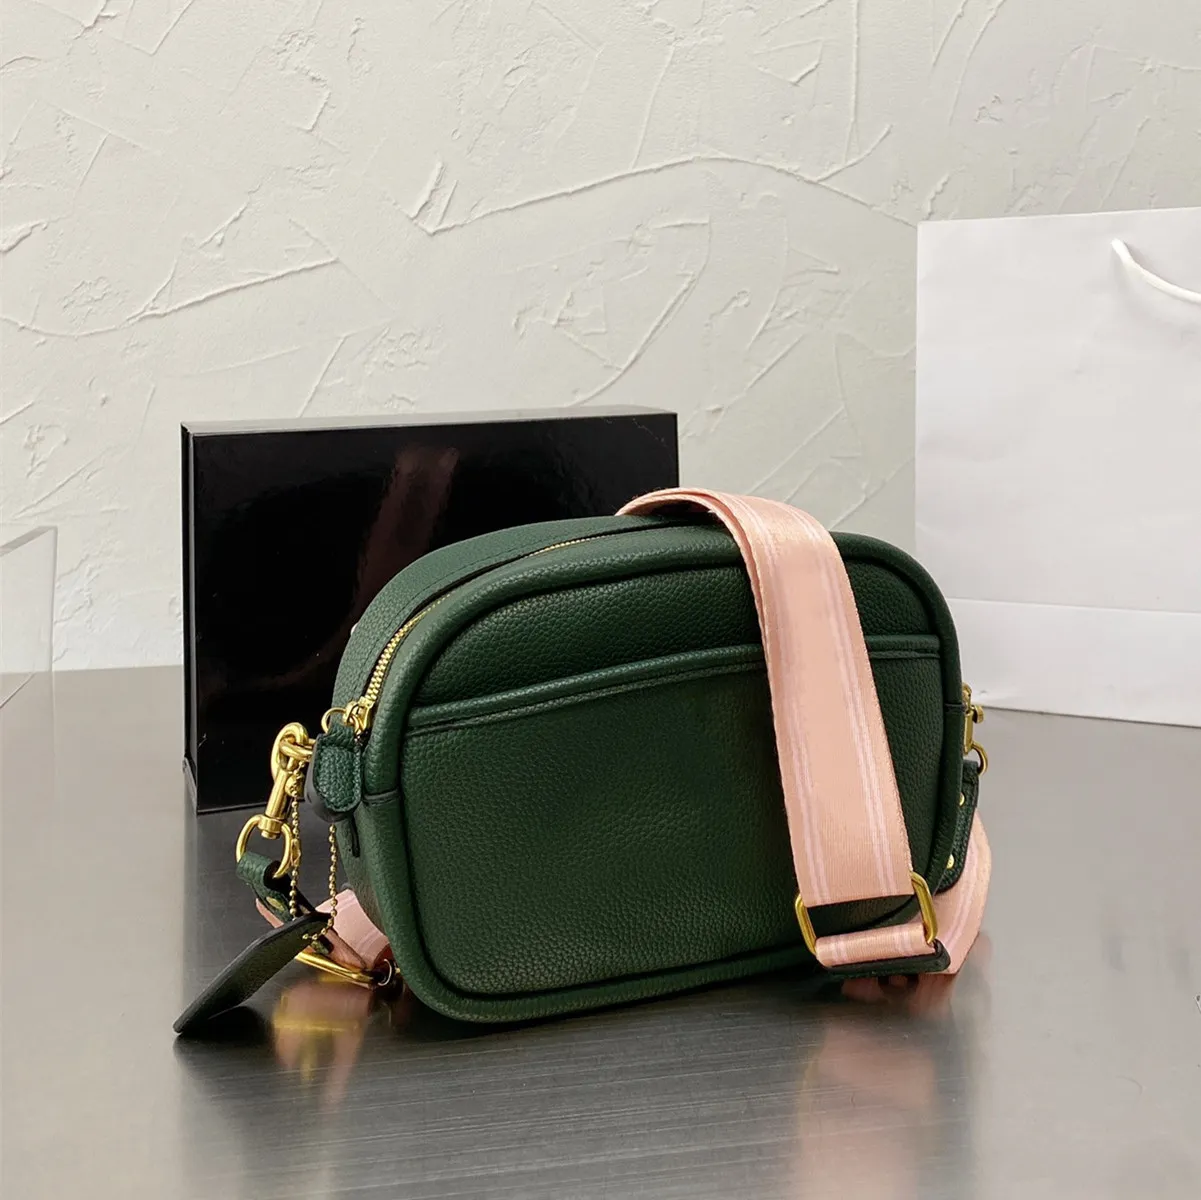 Camera bag latest single Shoulder Messenger Bag solid color small portable multi-purpose model fashionable and versatile regardless of age